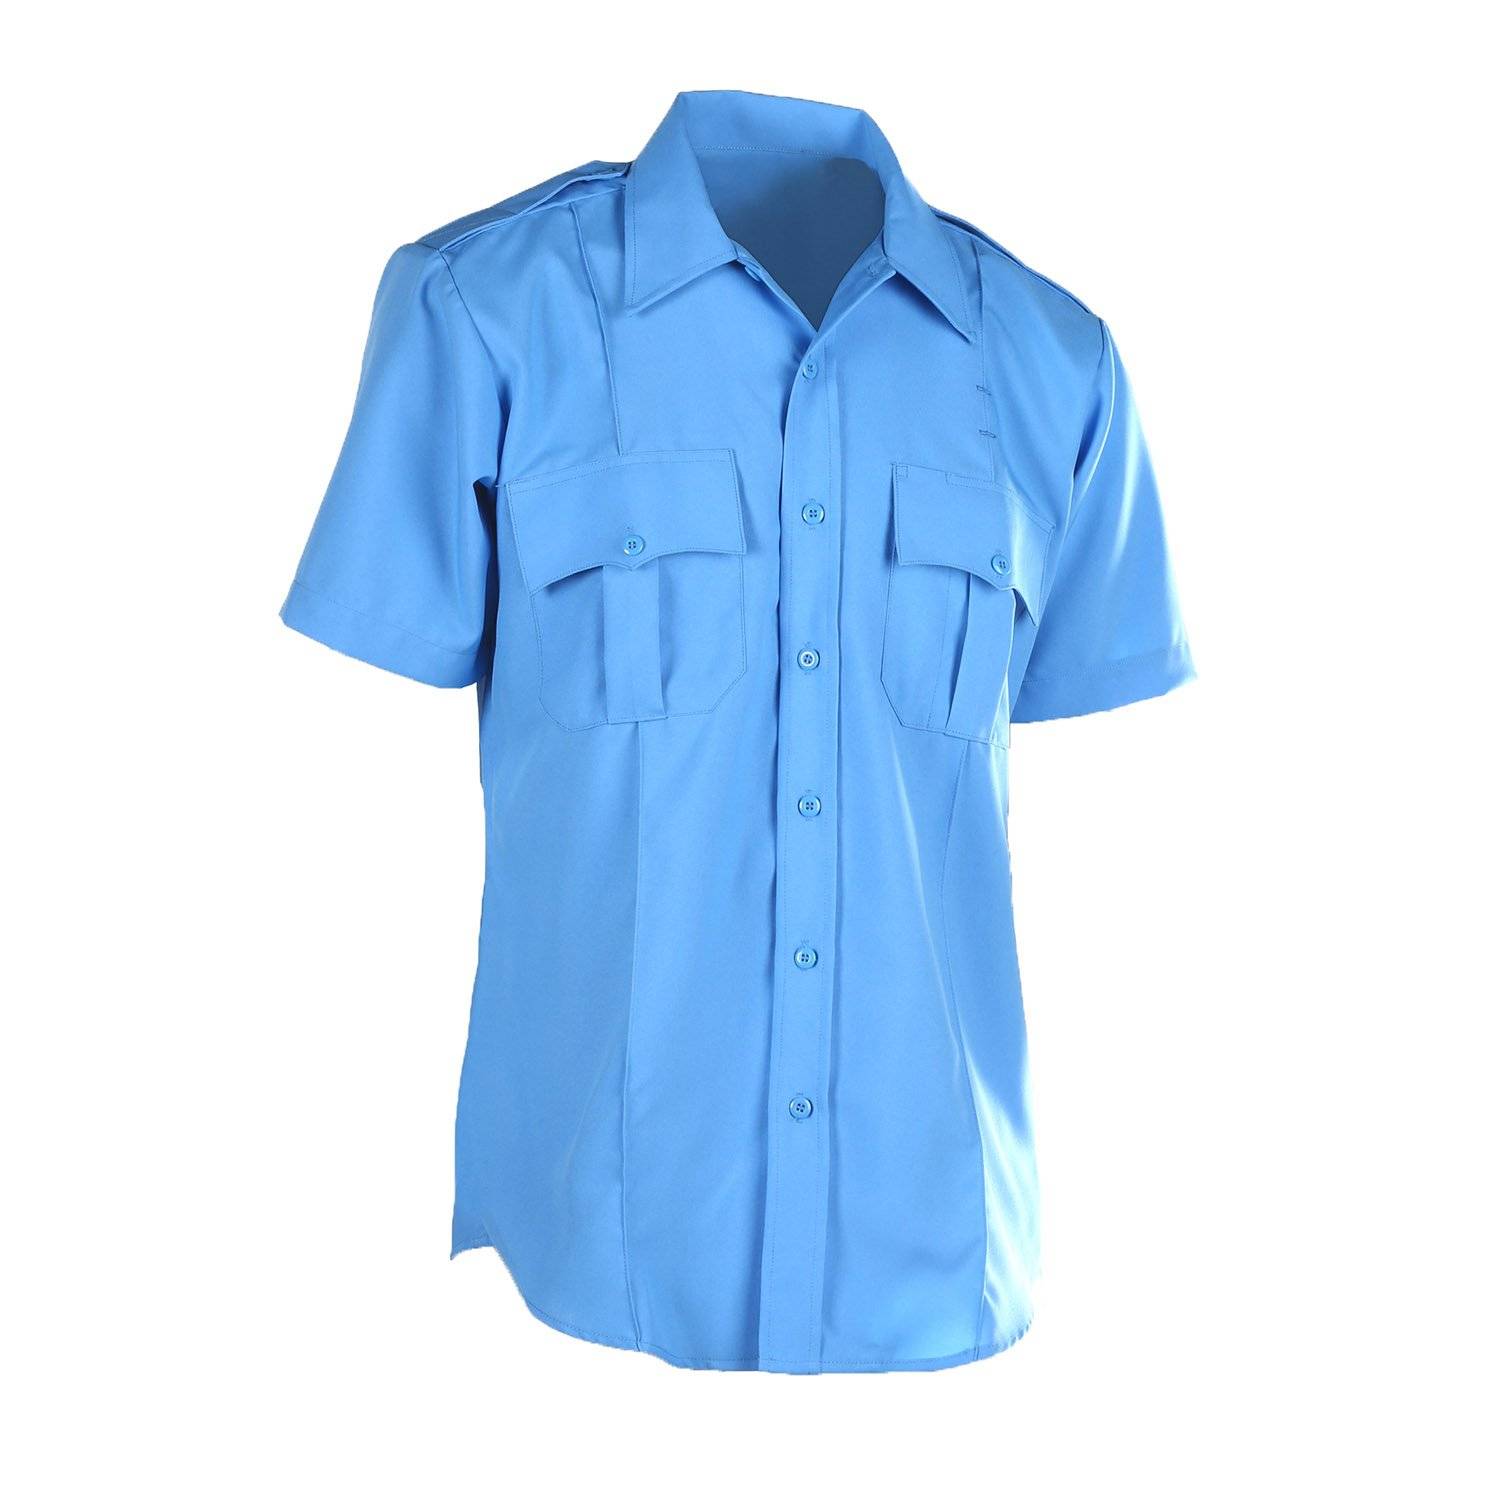 Tact Squad Men’s Polyester Short Sleeve Uniform Shirt (8012)